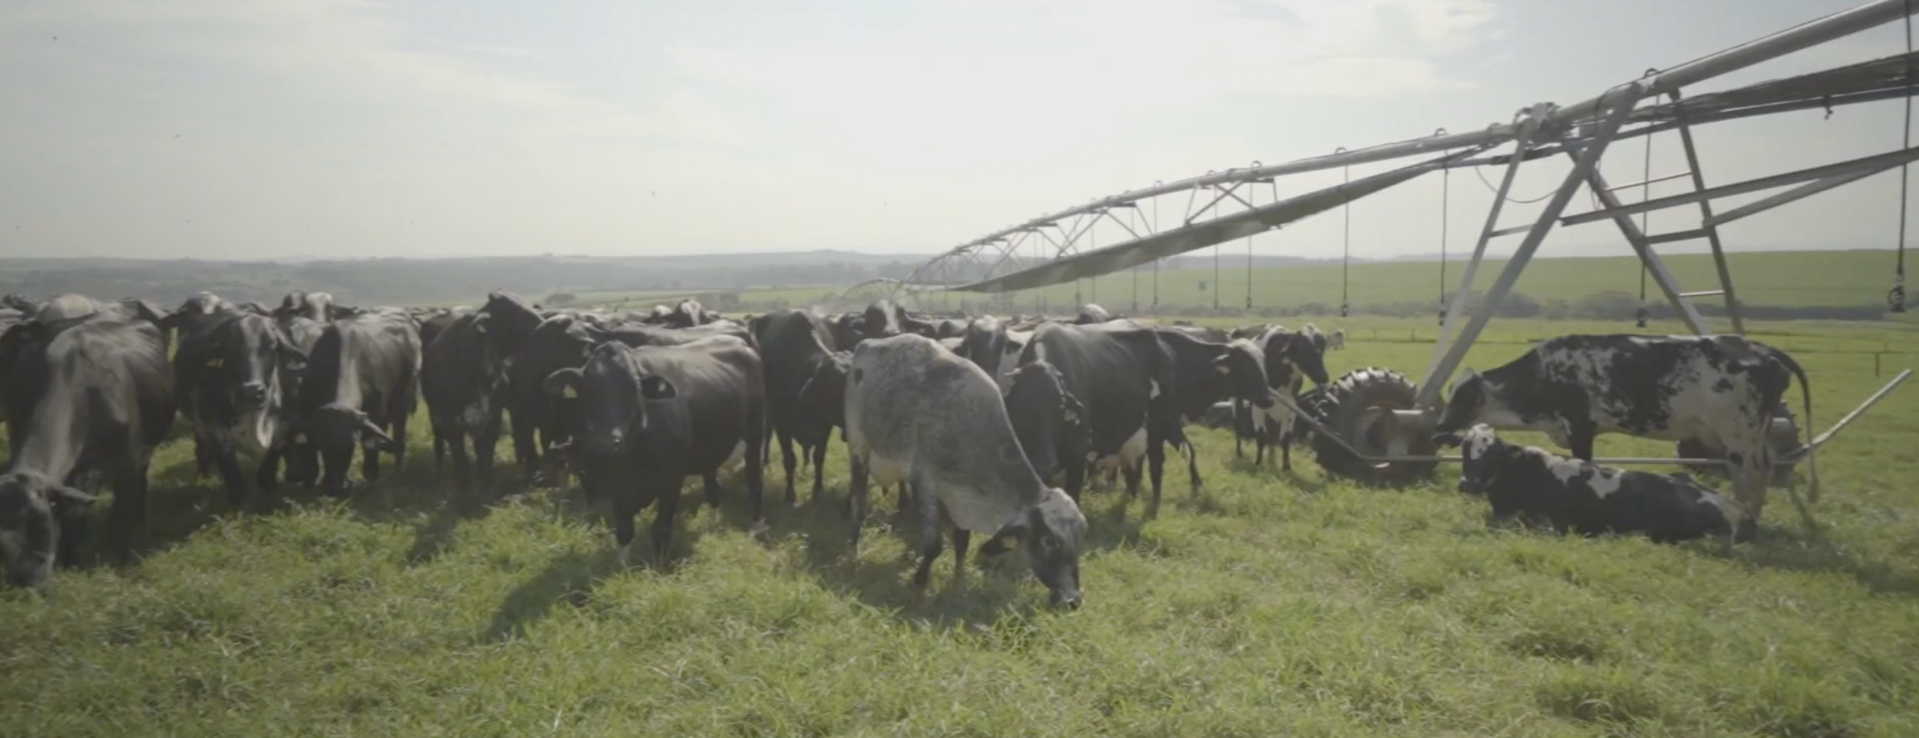 Brazilian Dairy Operation Depends on Center Pivot Irrigation